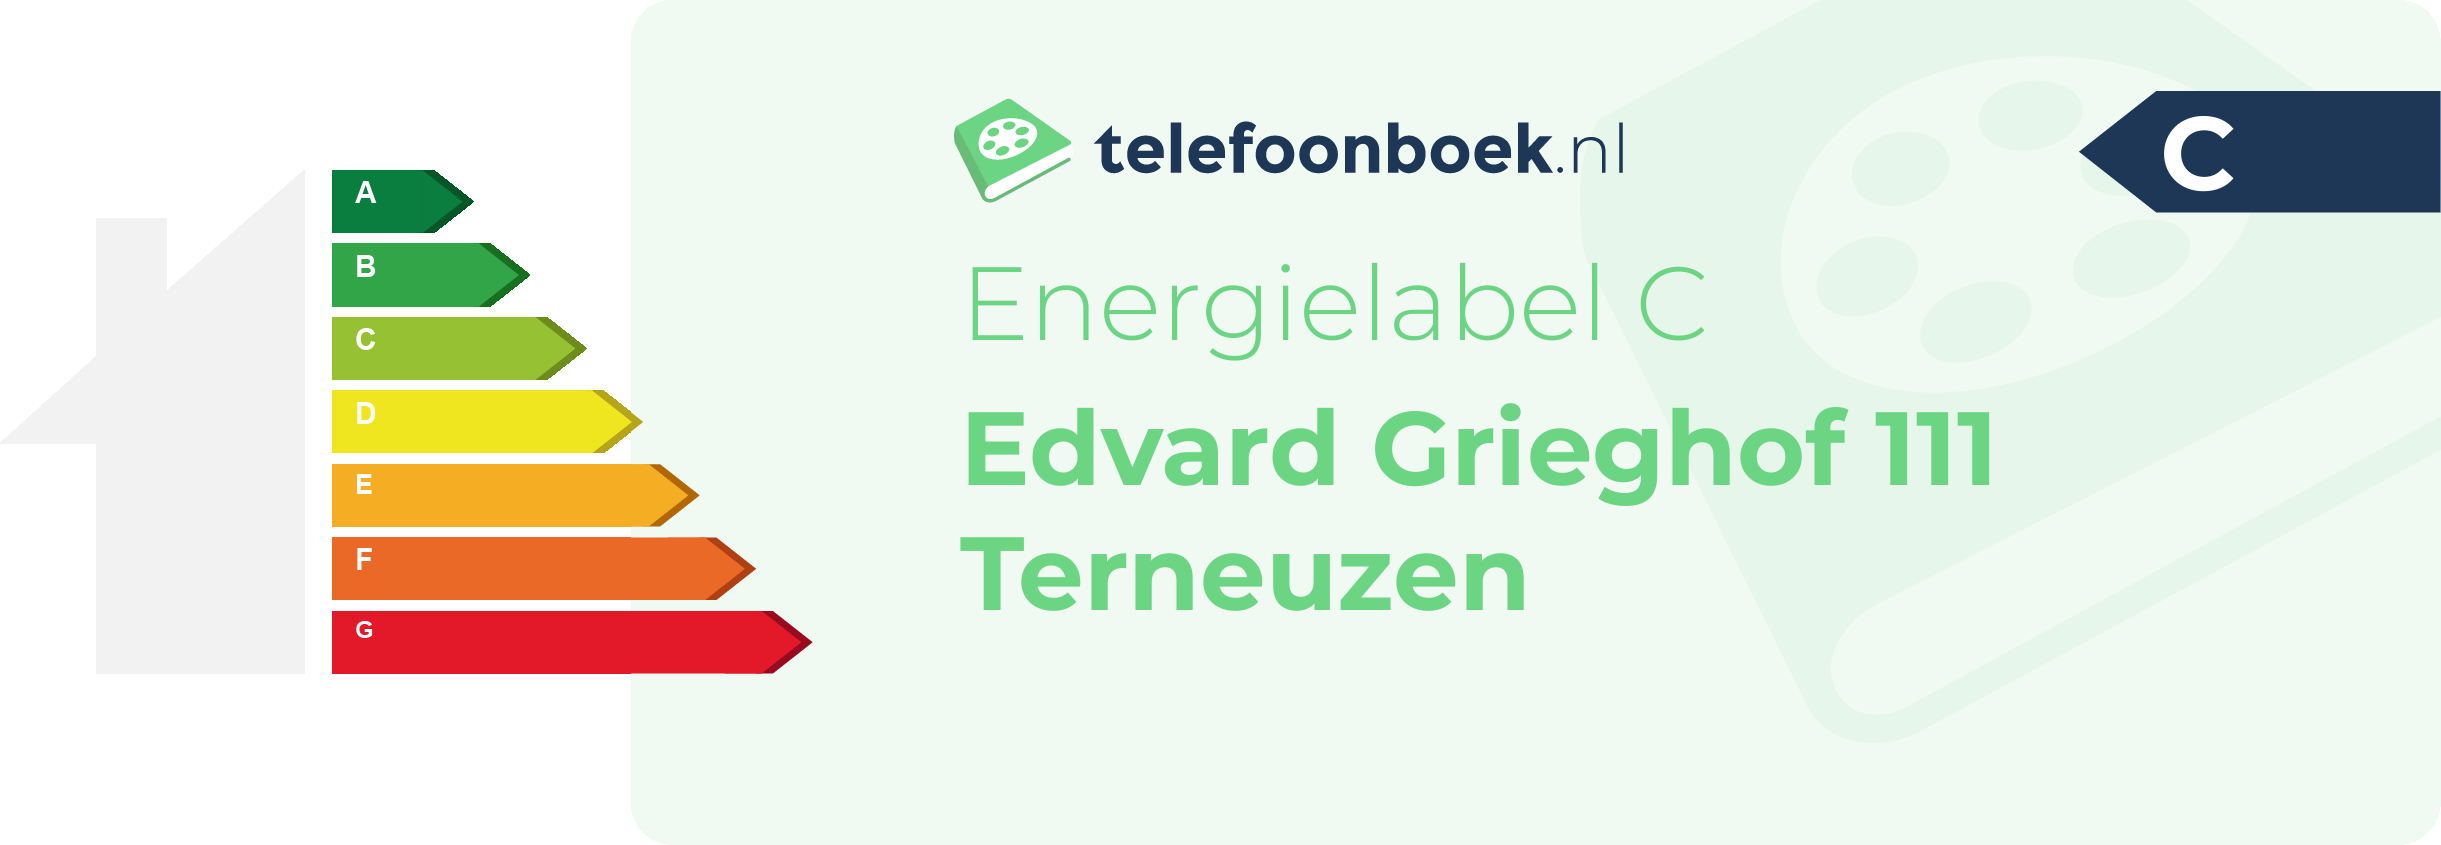 Energielabel Edvard Grieghof 111 Terneuzen